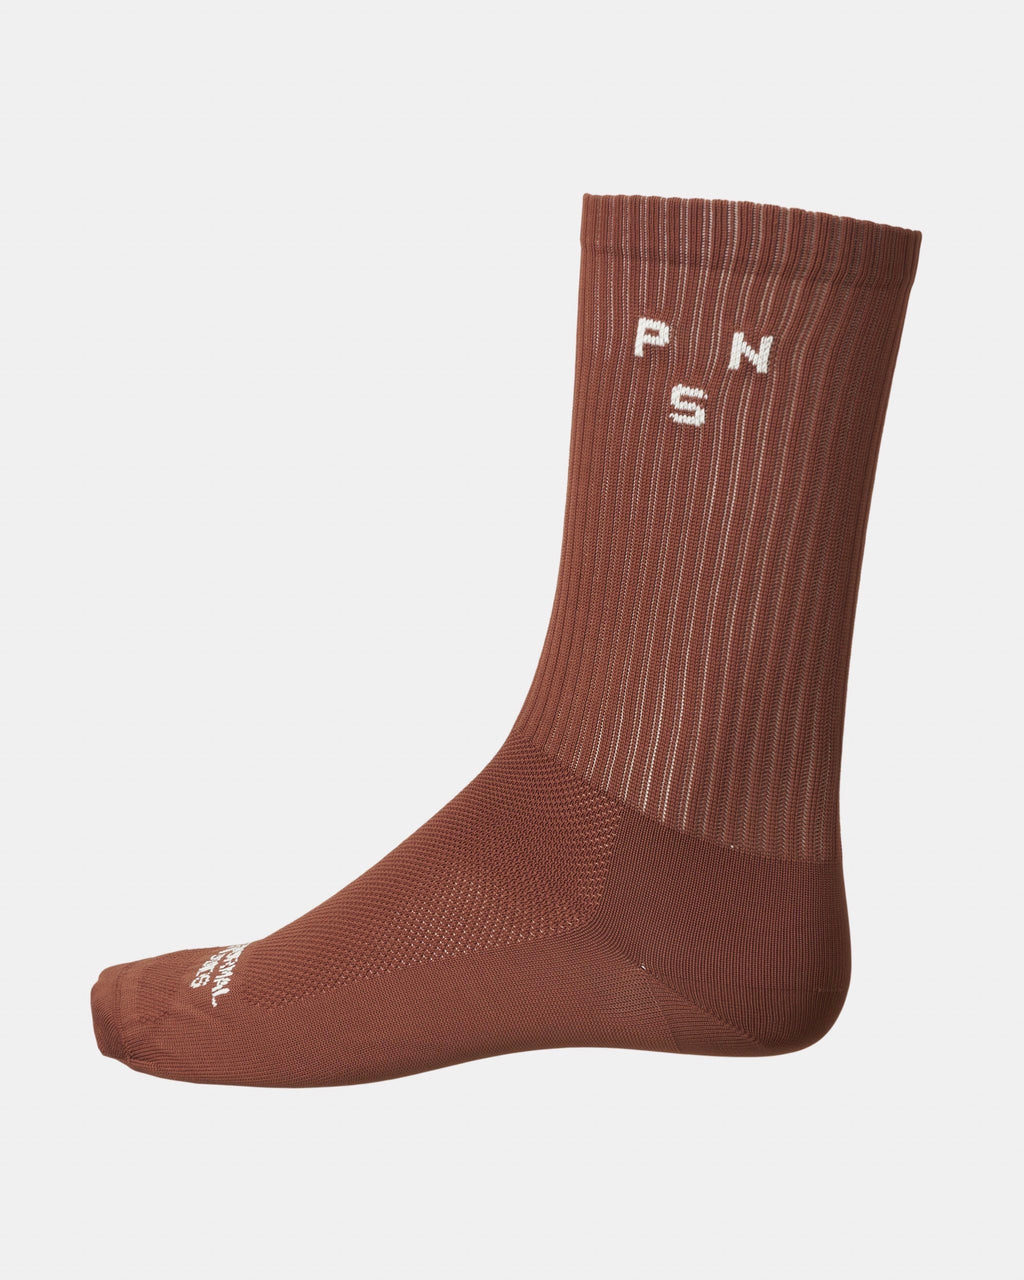 Off-Race Ribbed Socks